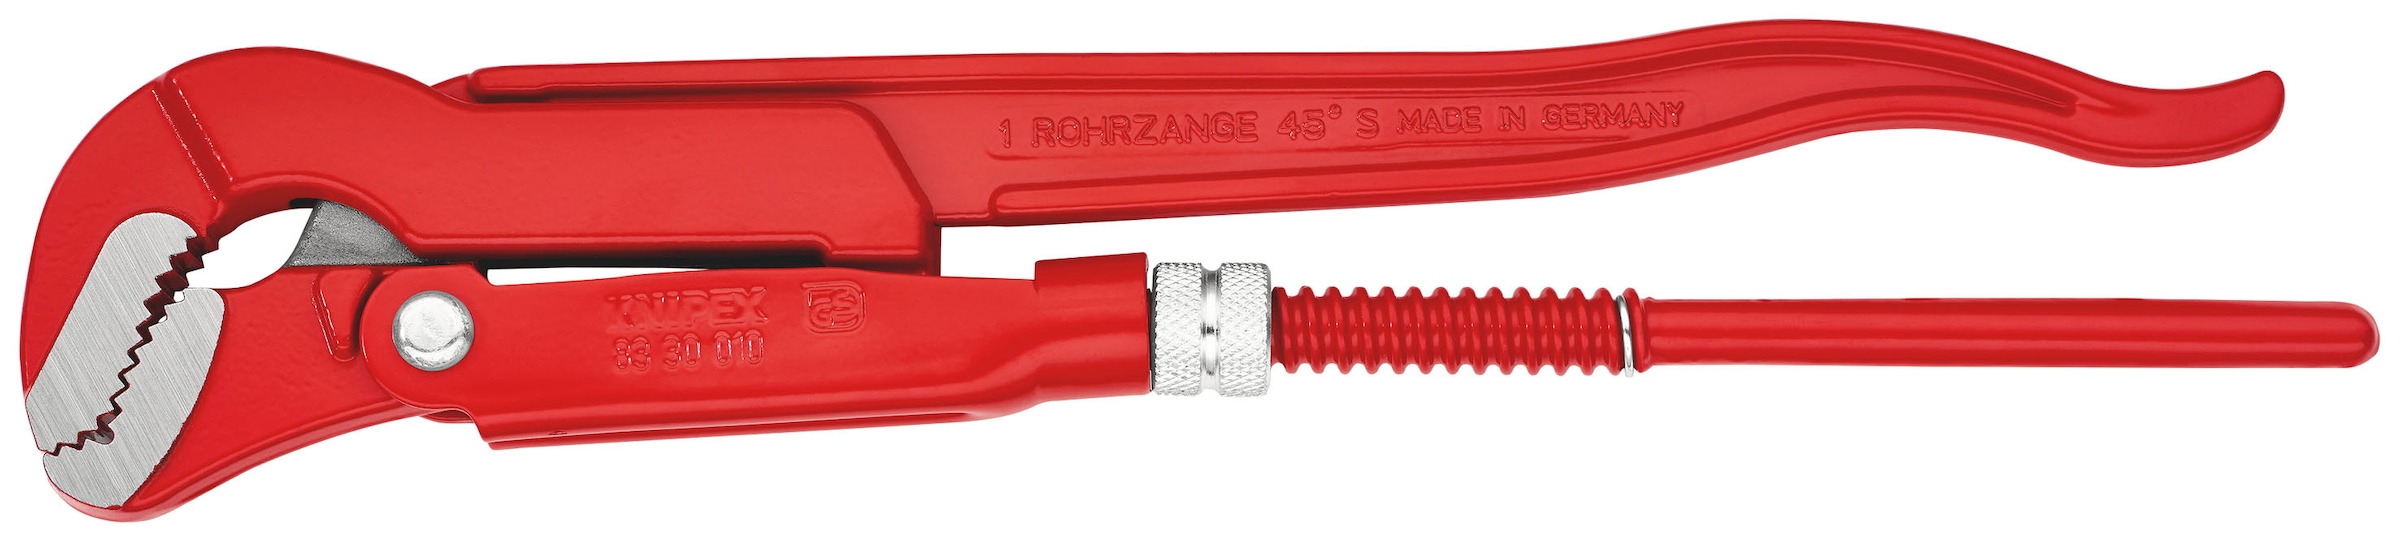 Rohrzange »83 30 010 S-Maul«, (1 tlg.), rot pulverbeschichtet 320 mm